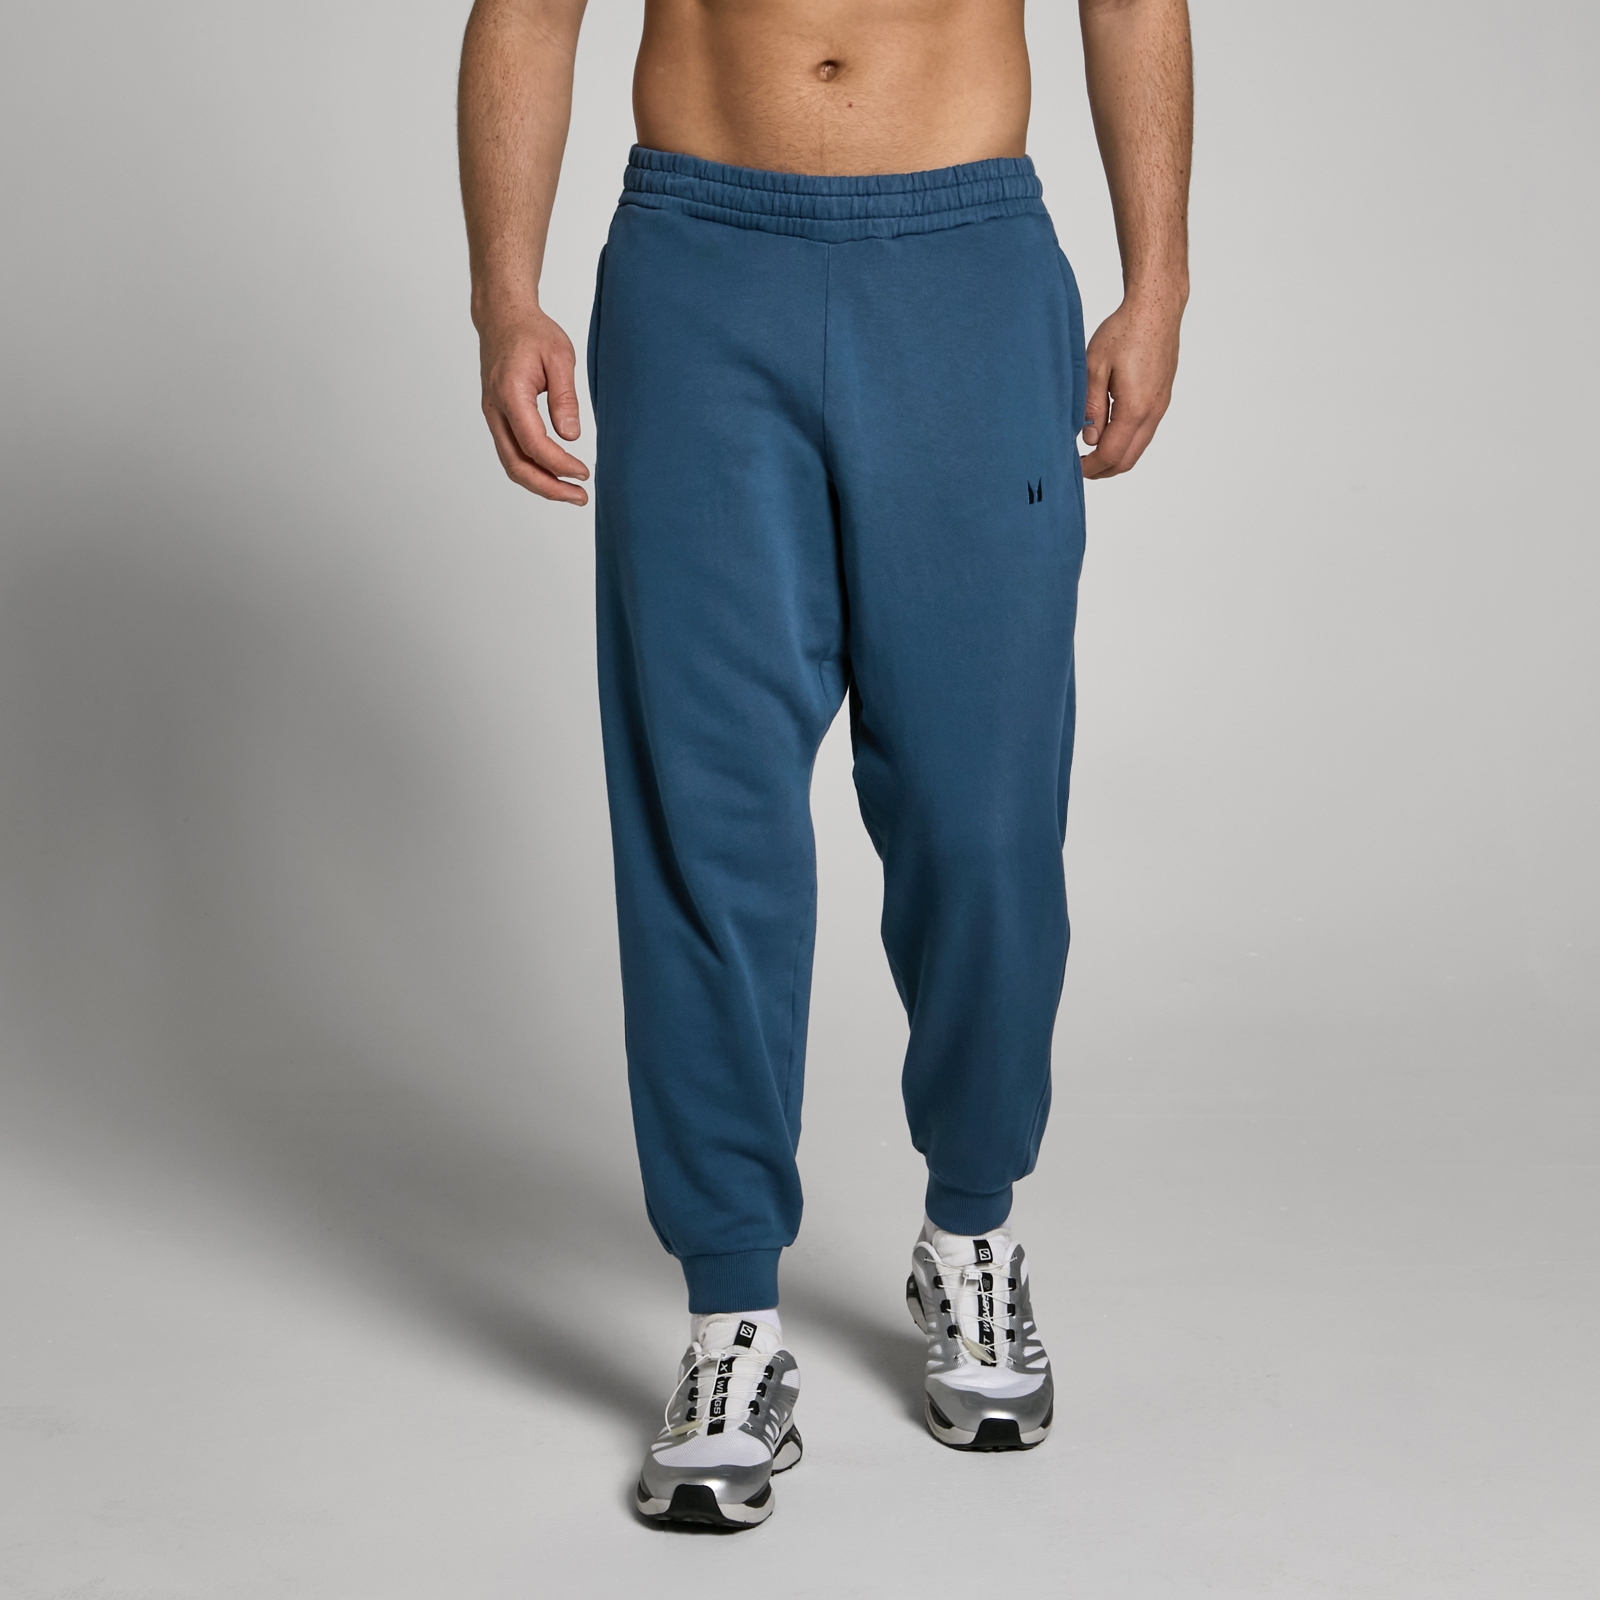 Image of Pantaloni da jogging slavati MP Tempo da uomo - Blu navy slavato - XL